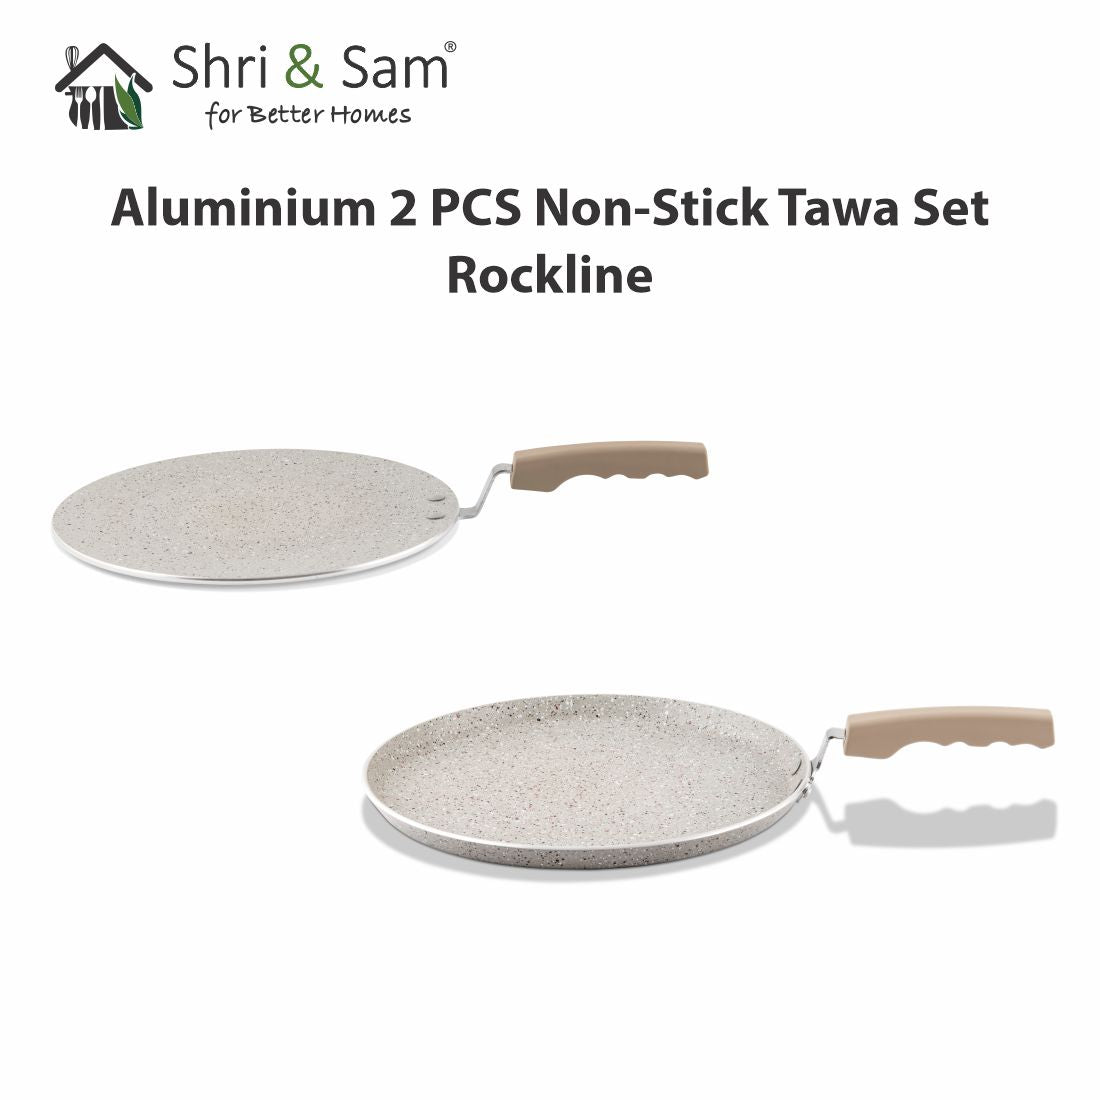 Aluminium 2 PCS Non-Stick Tawa Set Rockline